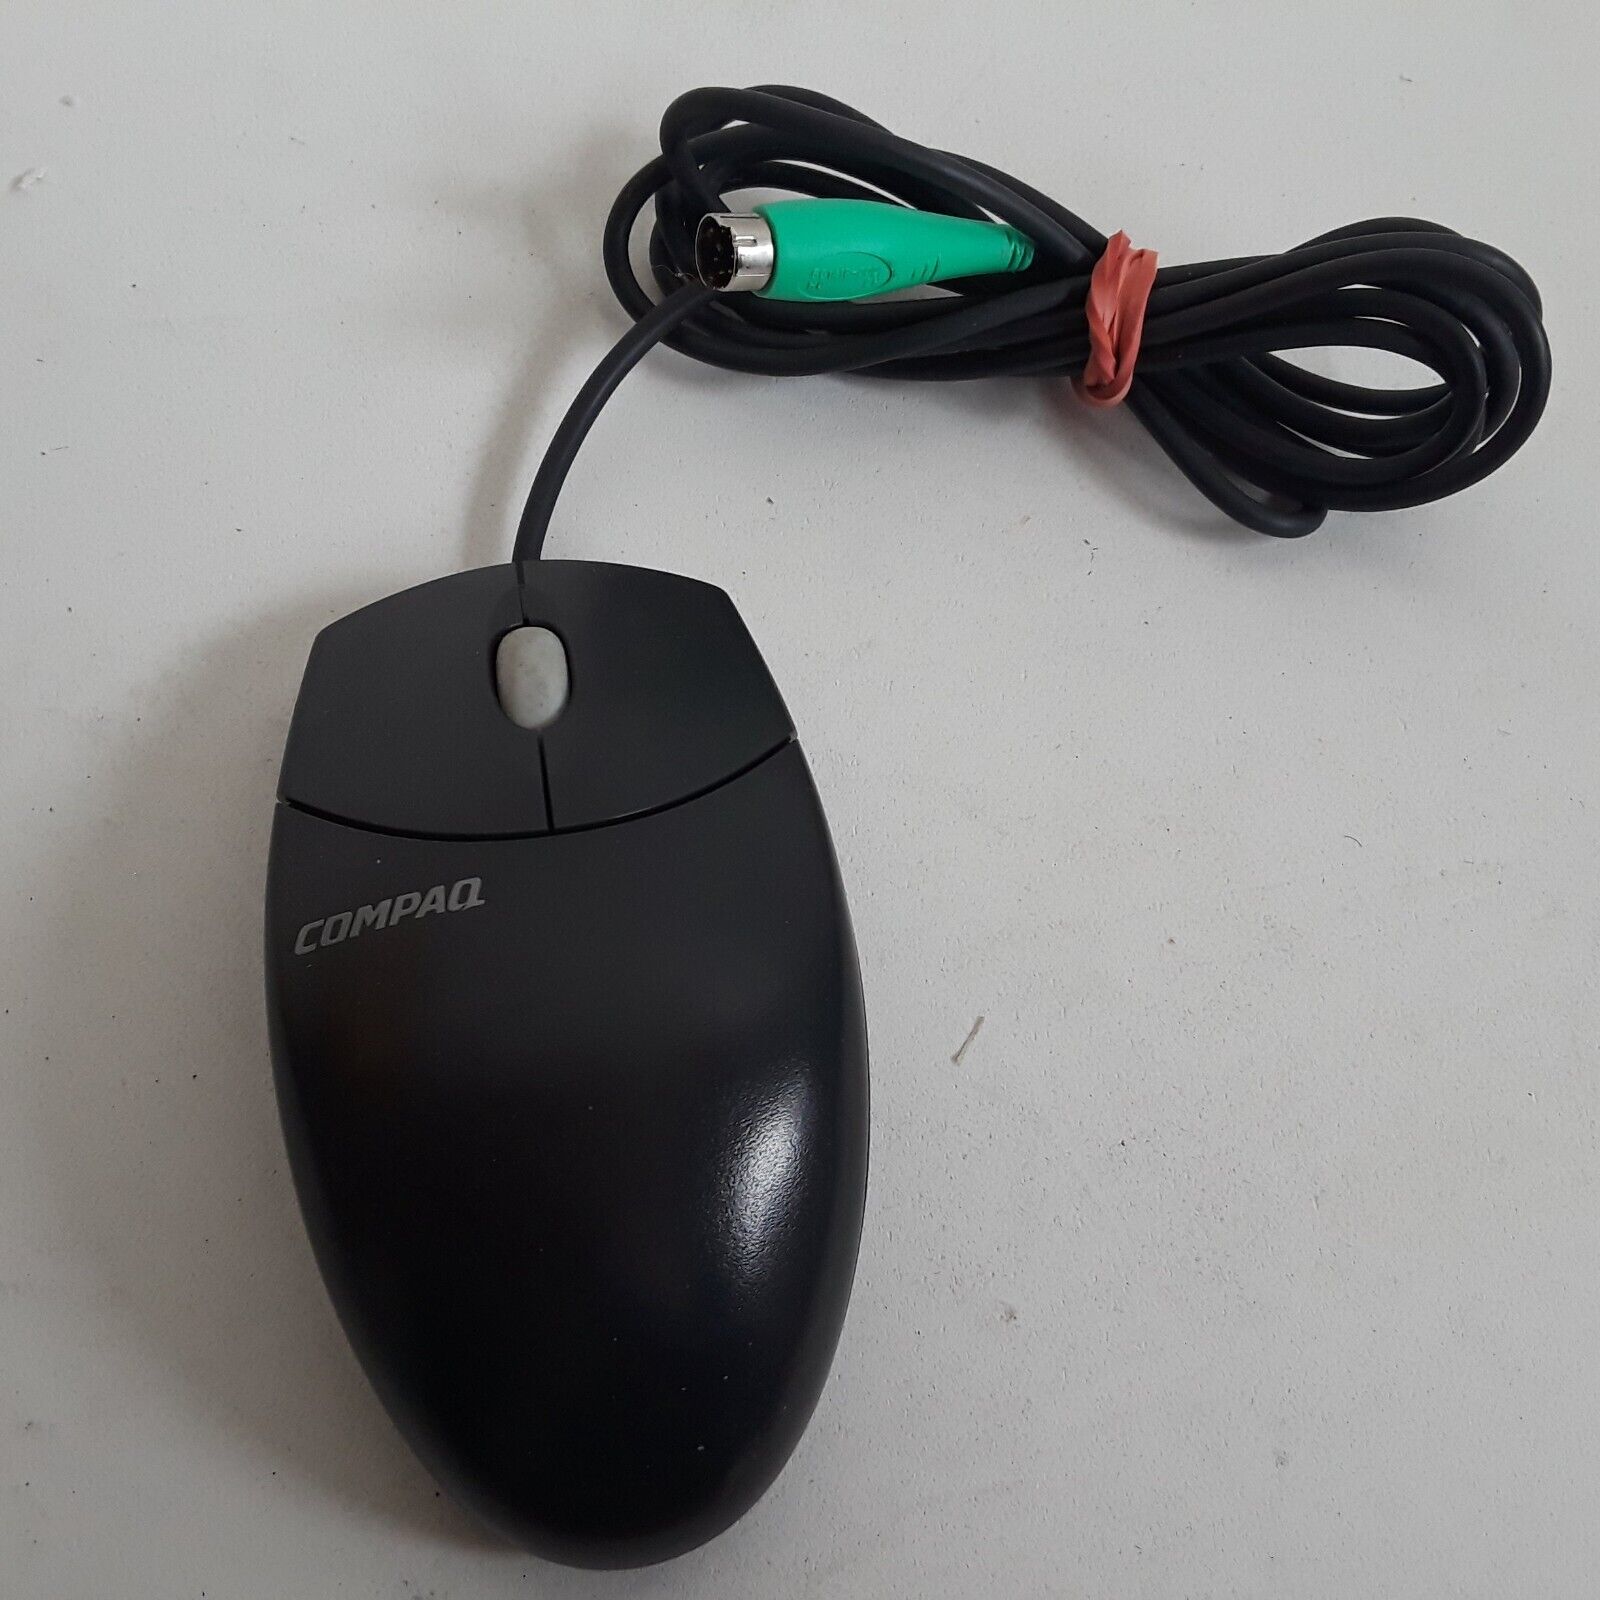 Compaq M-S69 PS2 Scroll Trackball 2 Button Mouse Black